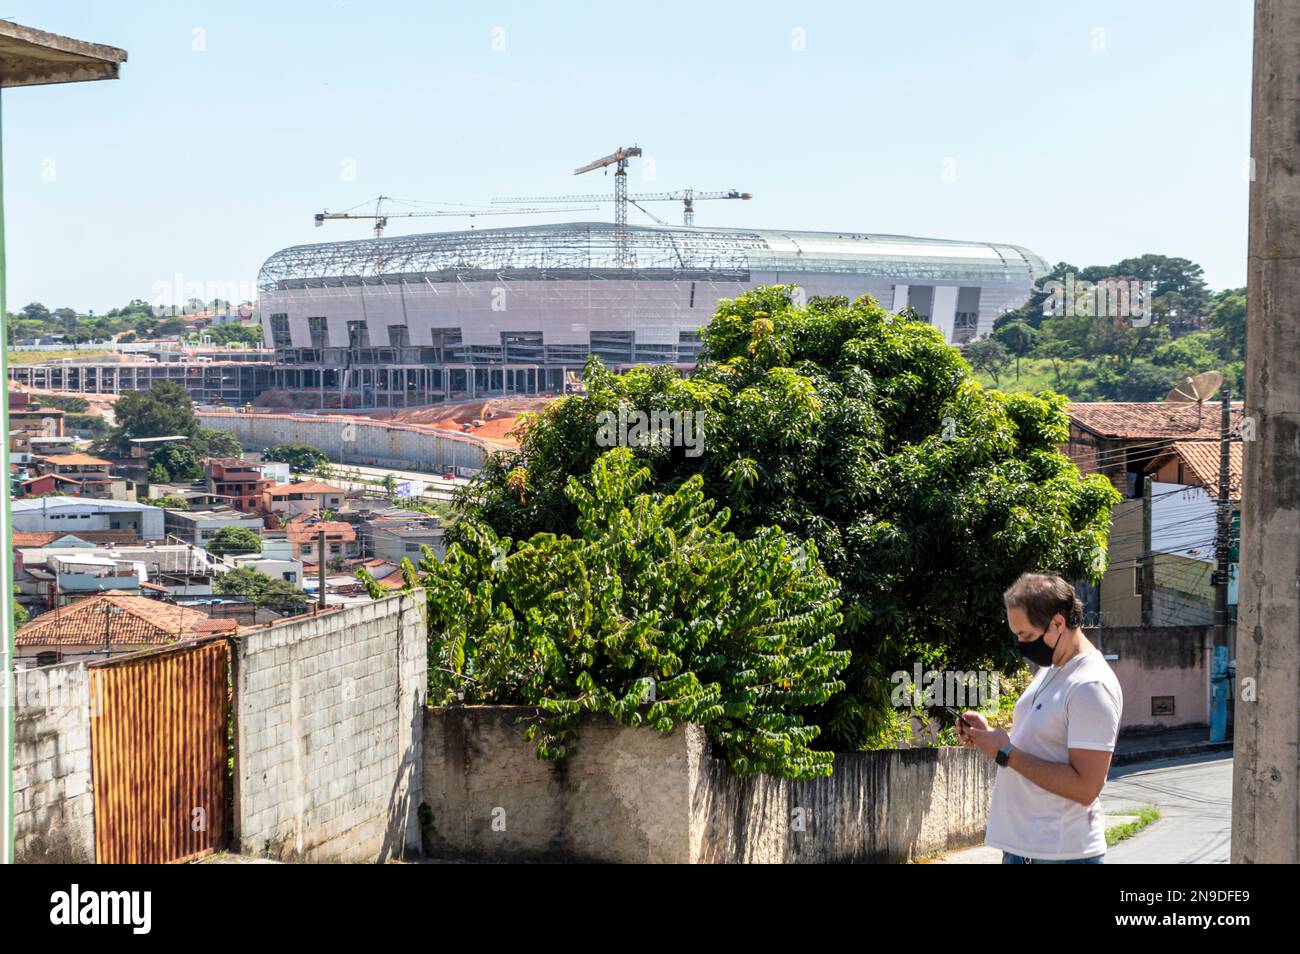 The Football stadium under construction in the city of Belo Horizonte Stock Photo